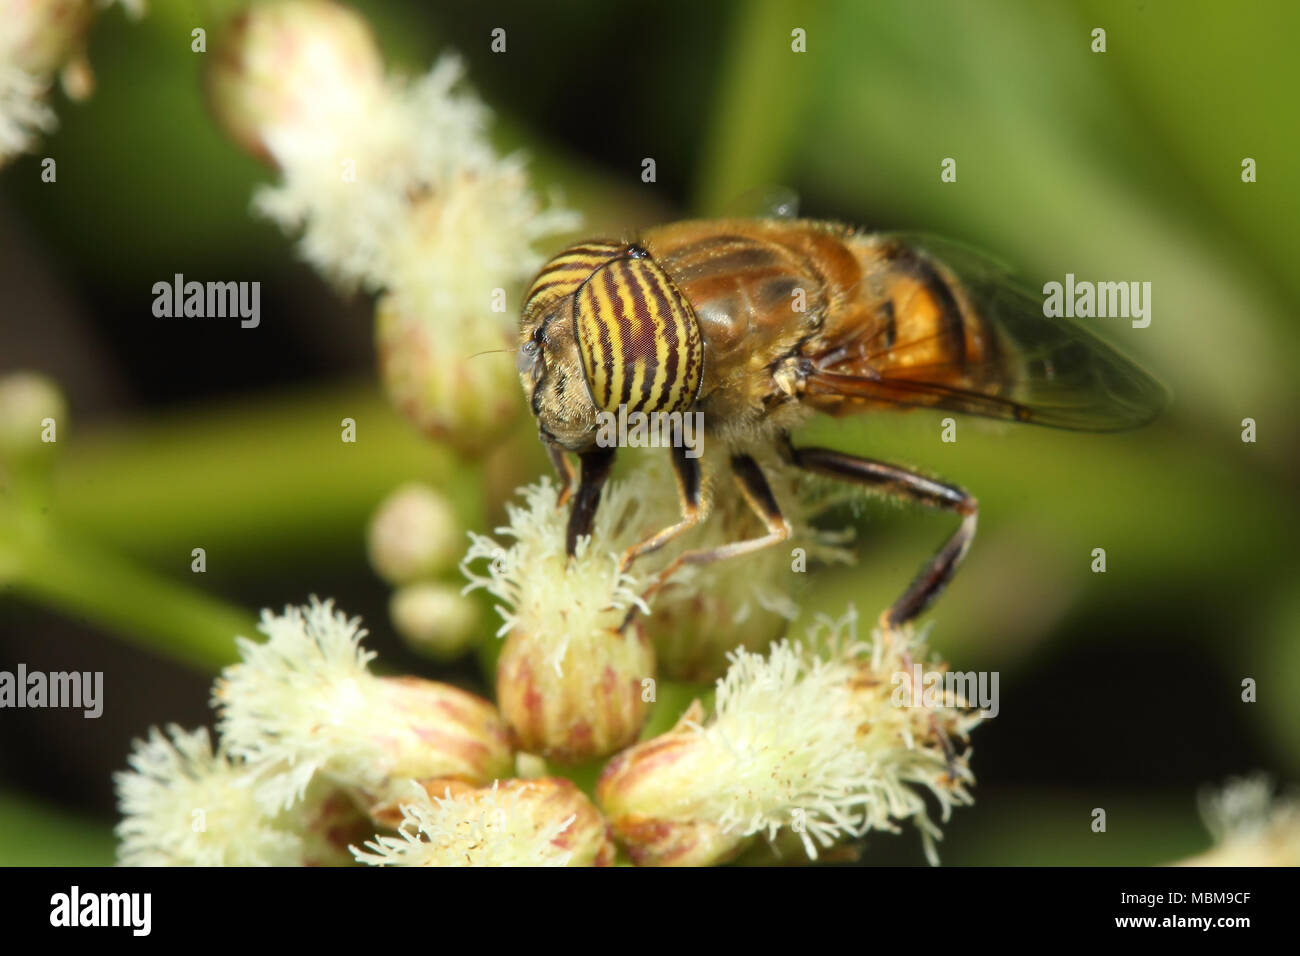 Eristalinus sp. (Rondani, 1845) Diptera: Syrphidae. Eristalinus is a genus of hoverfly. Most species have very distinctive eye. Stock Photo